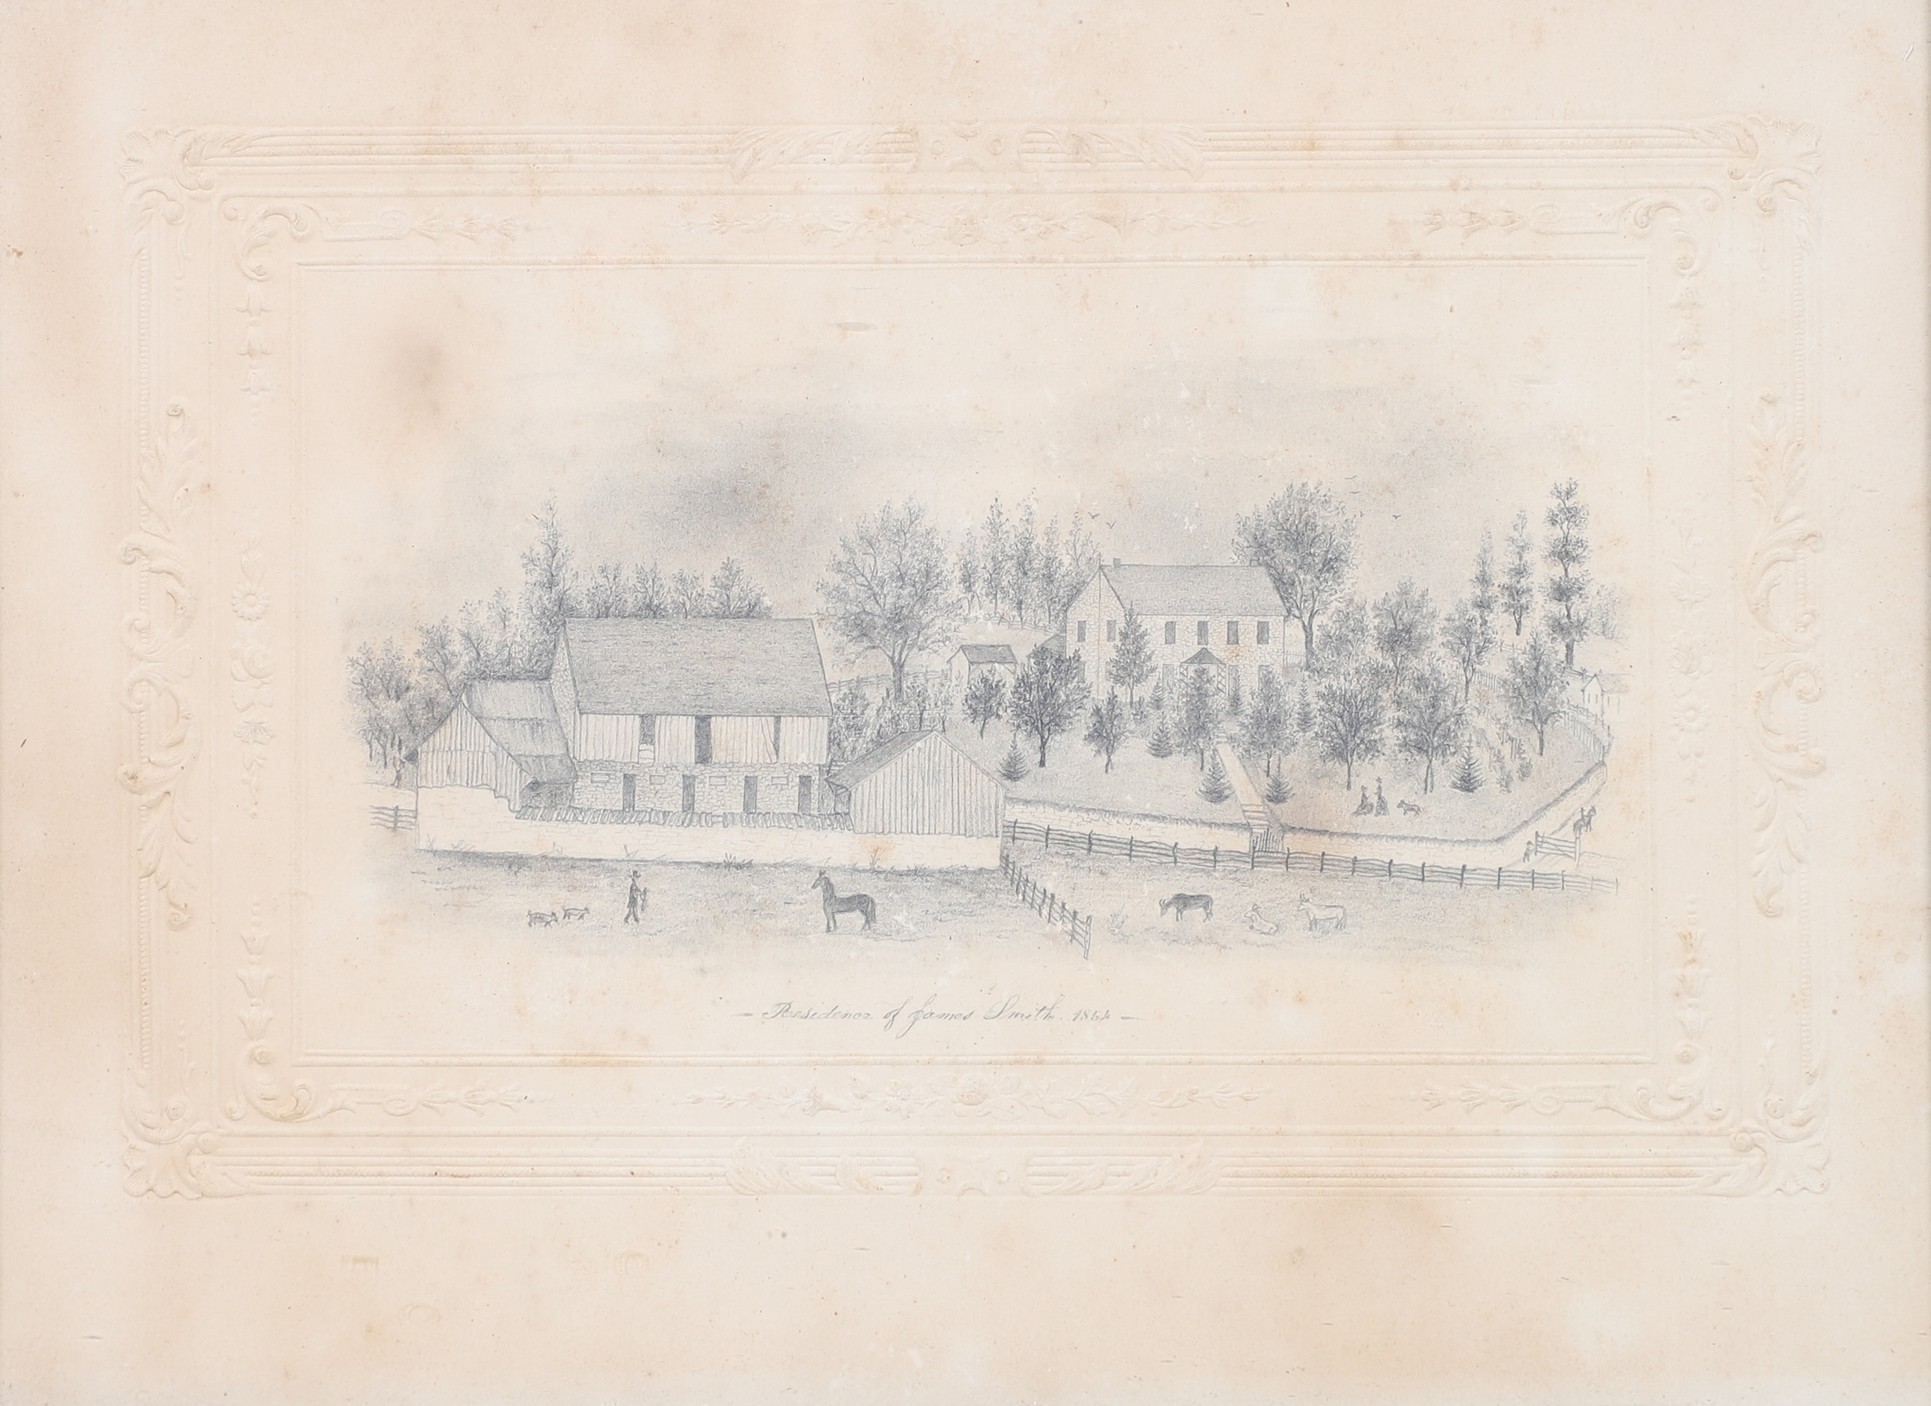 1854 American Folk Art Sketch of a Home